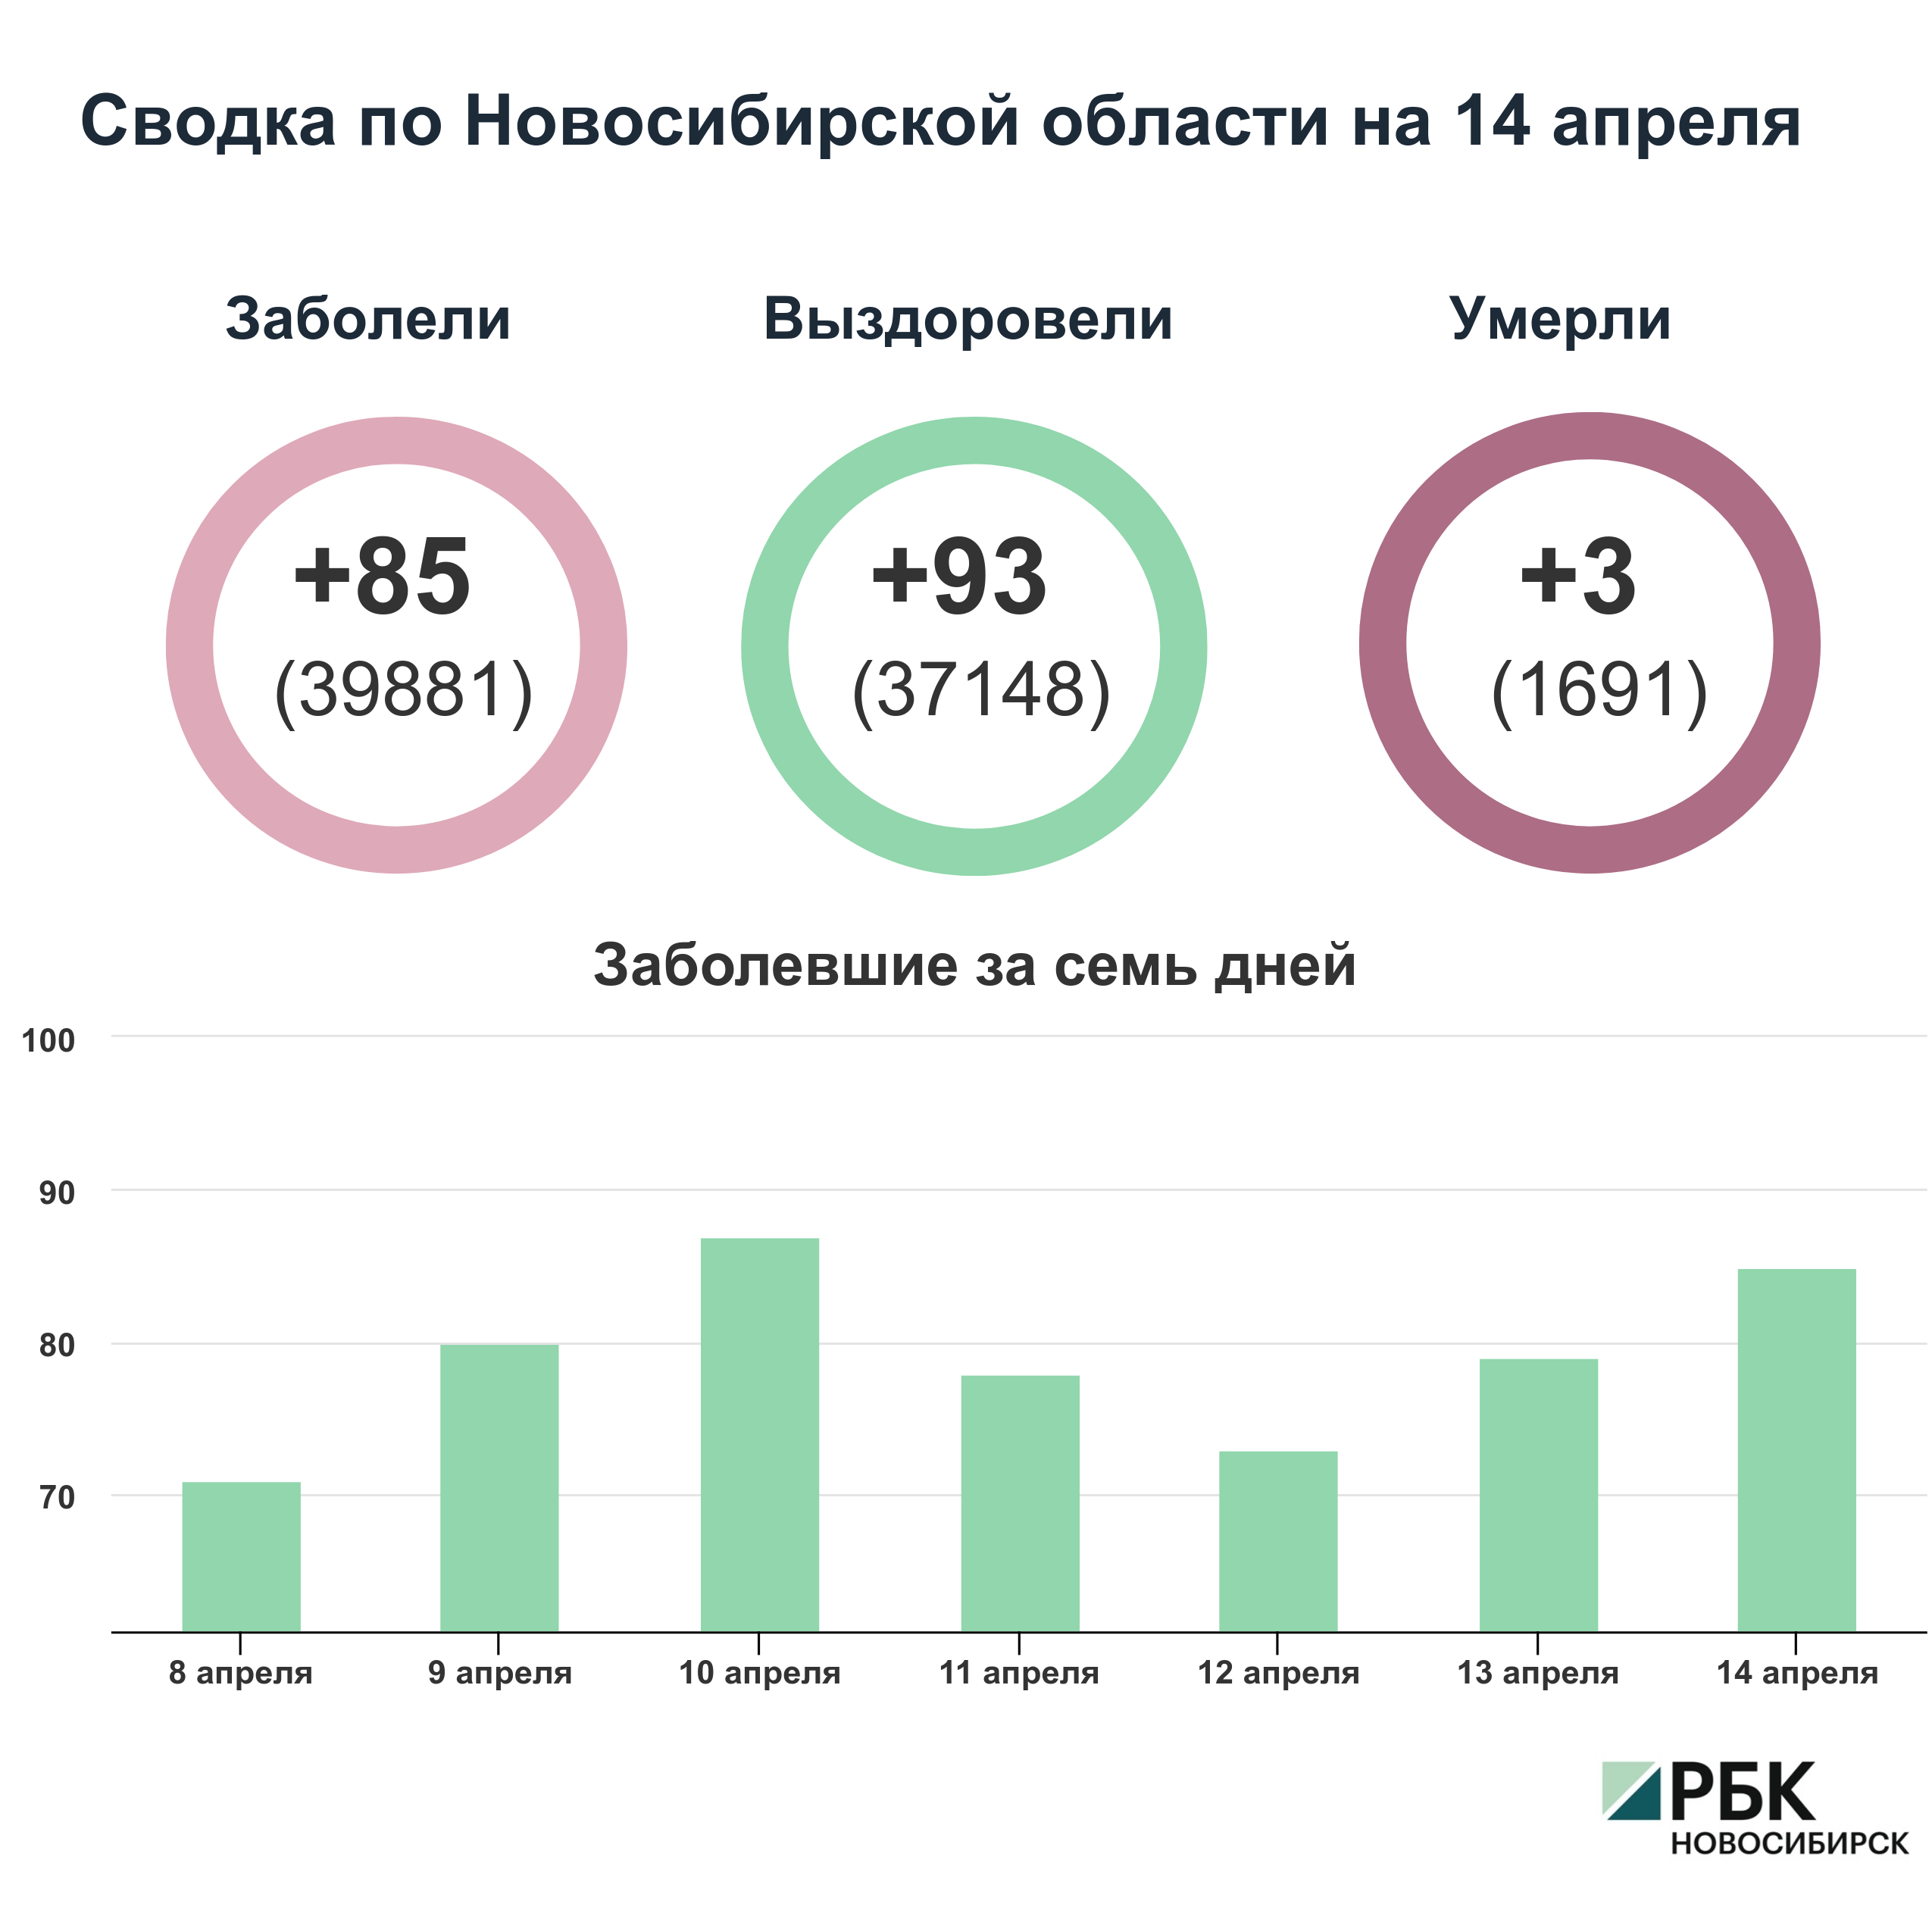 Коронавирус в Новосибирске: сводка на 14 апреля